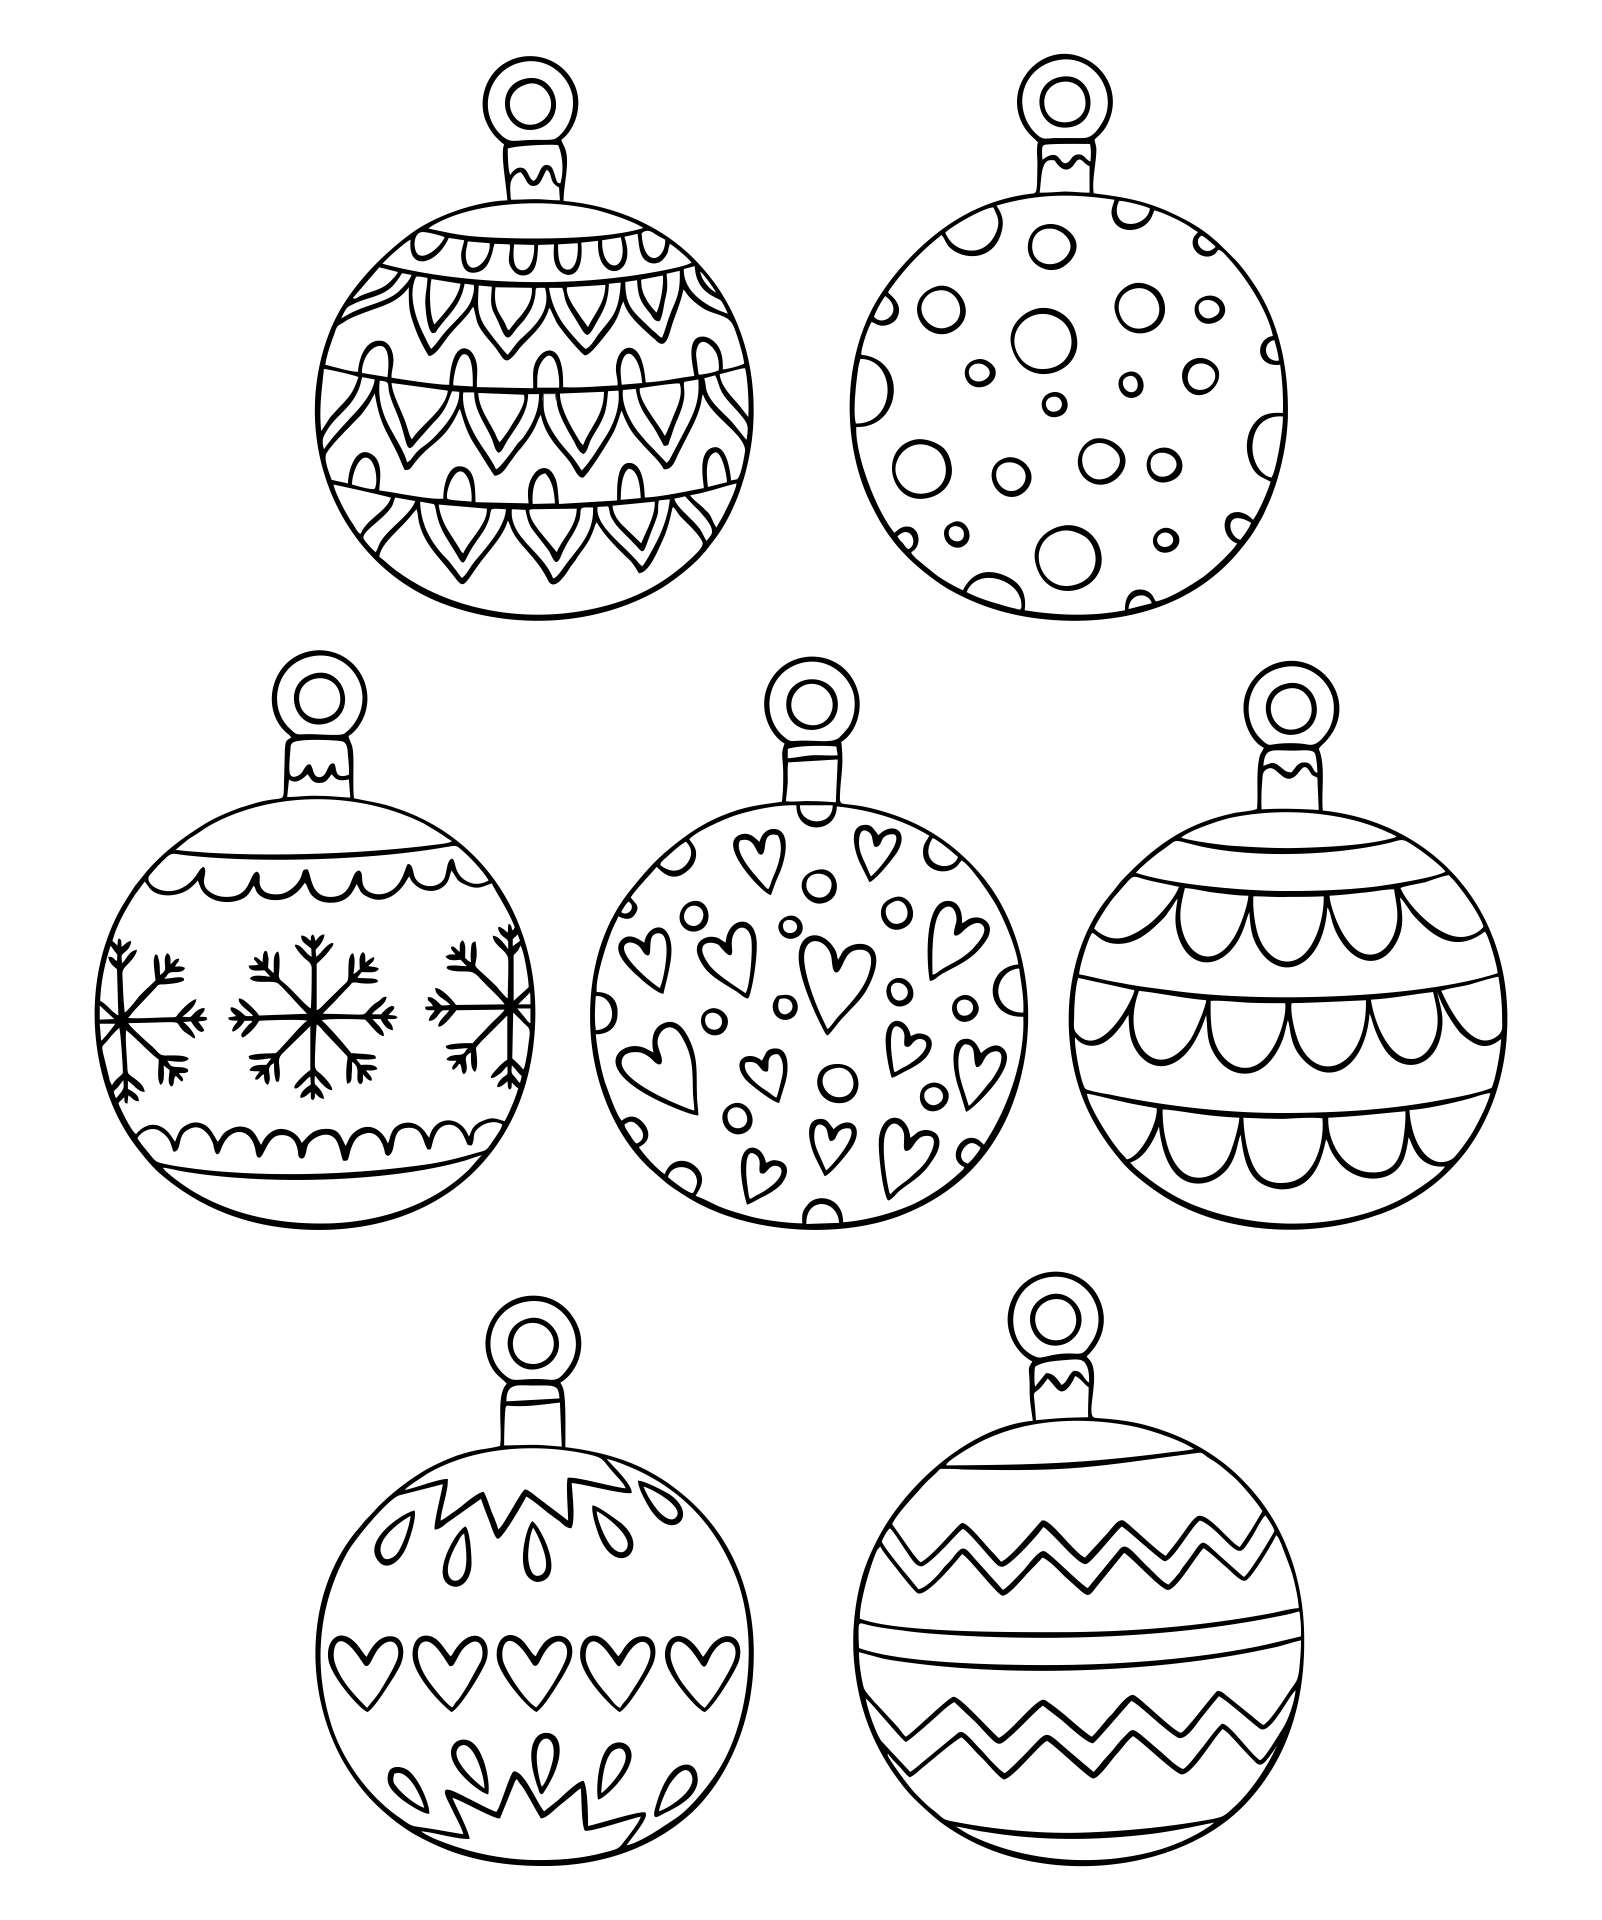 10 Best Preschool Printable Christmas Ornaments PDF for Free at Printablee